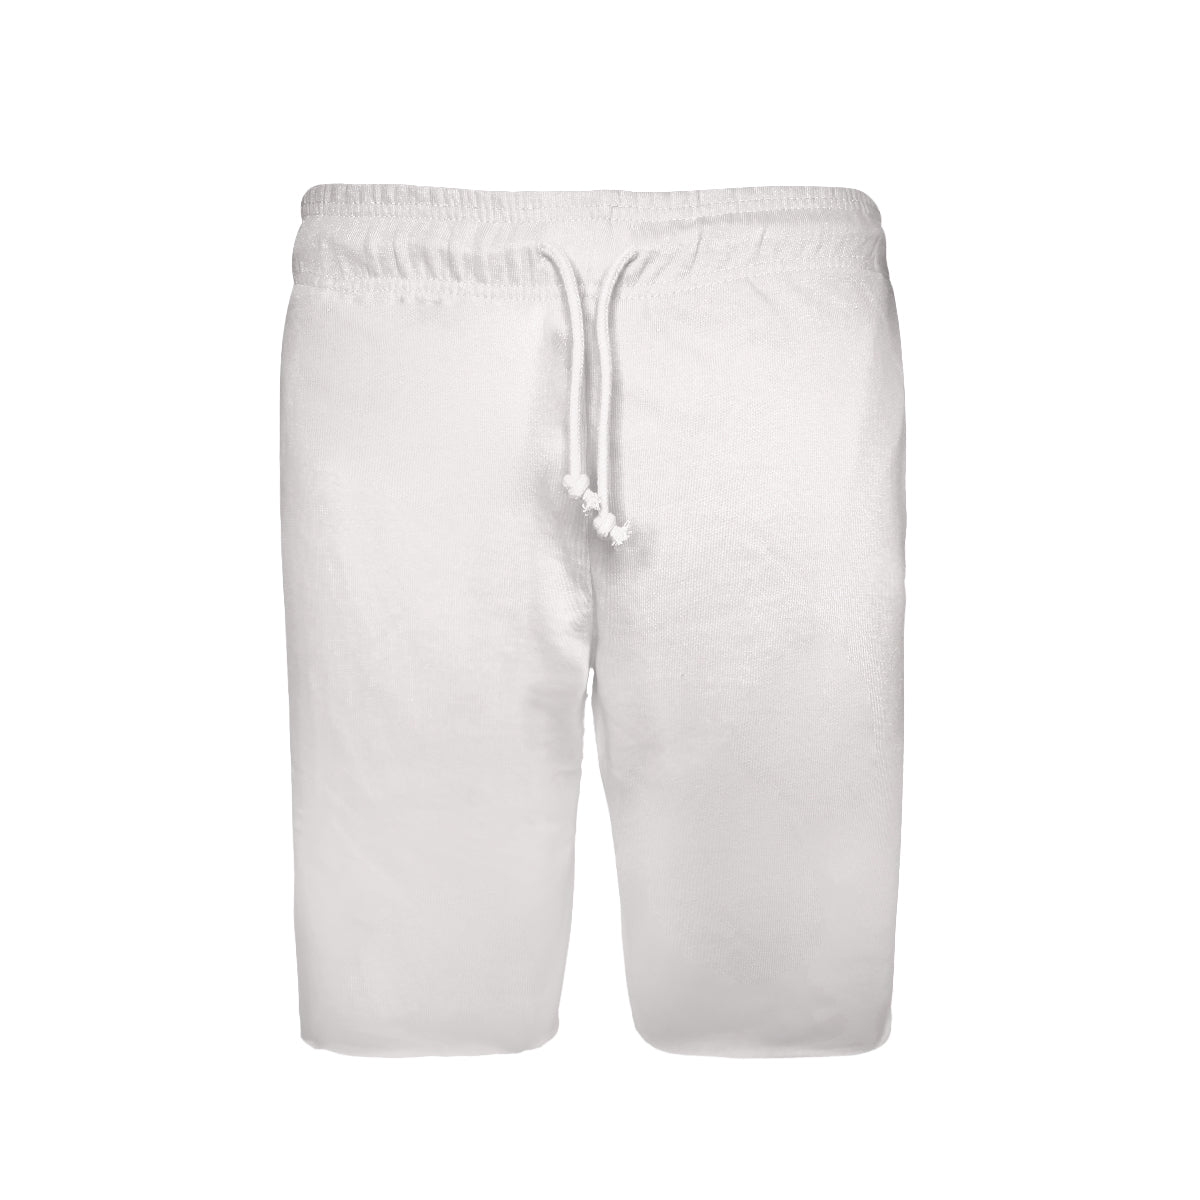 6030 - Adult Smart Shorts